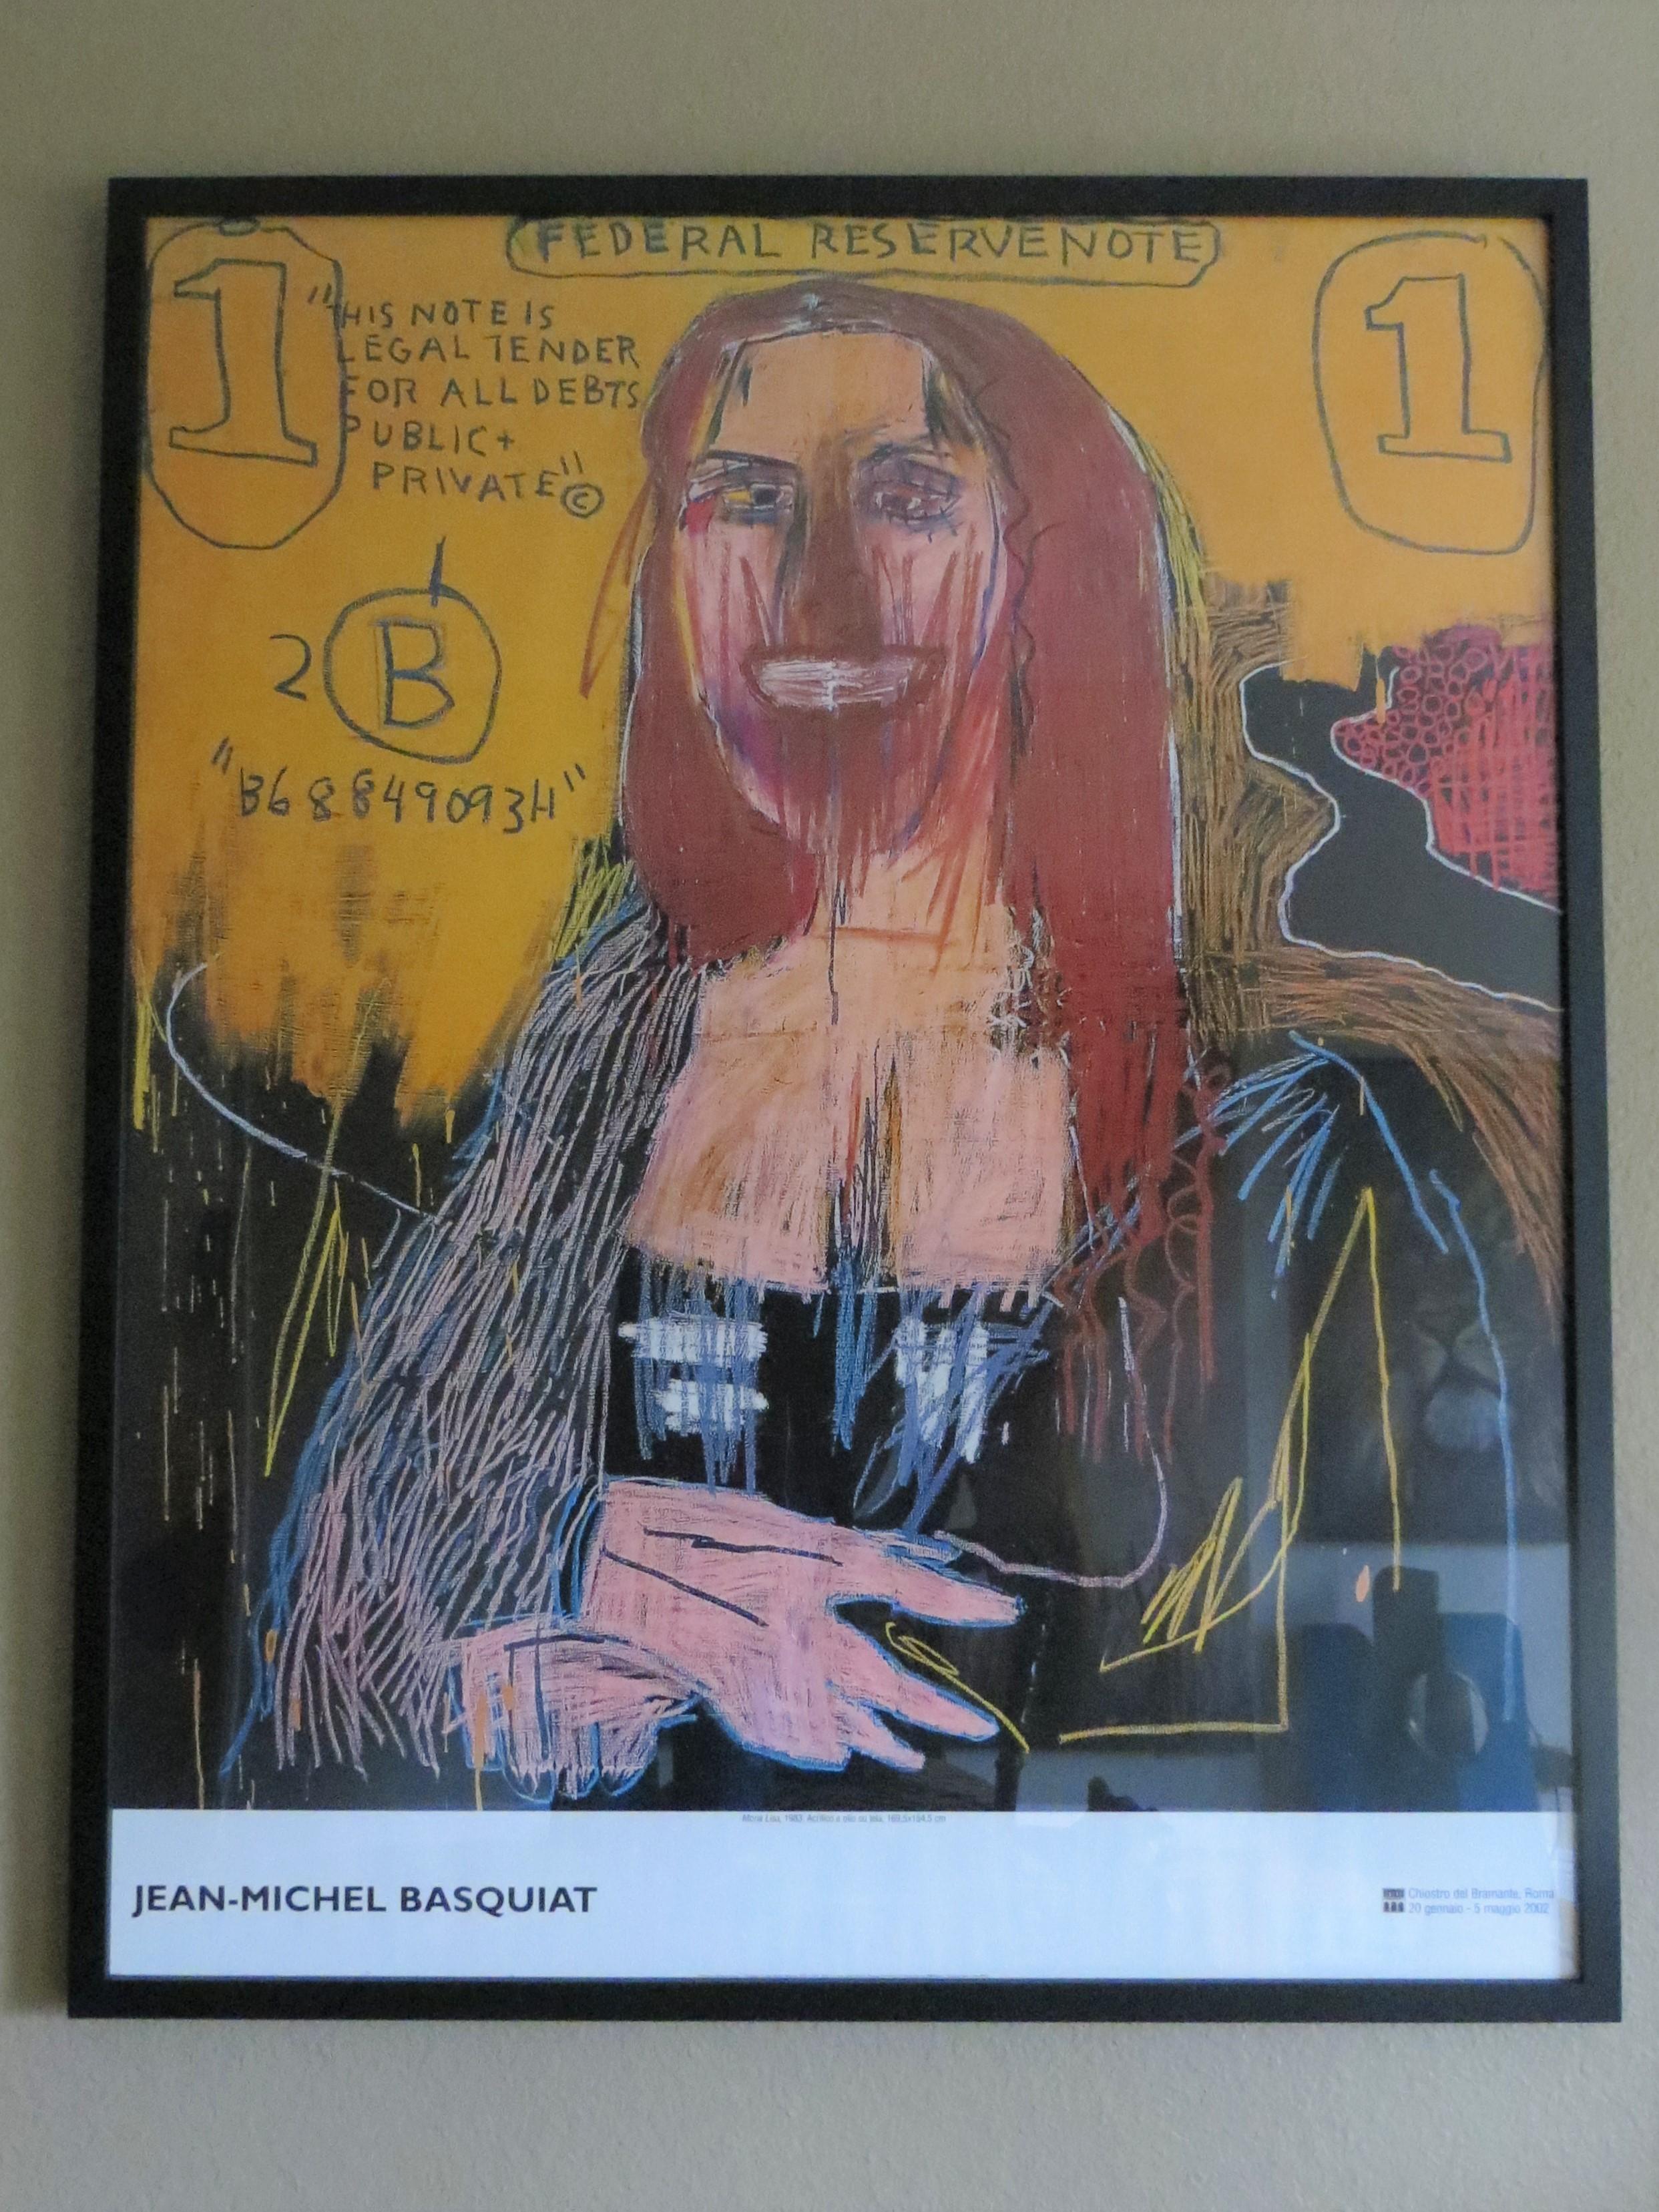  Jean-Michel Basquiat Mona Lisa Exhibition Poster - Street Art Print by after Jean-Michel Basquiat